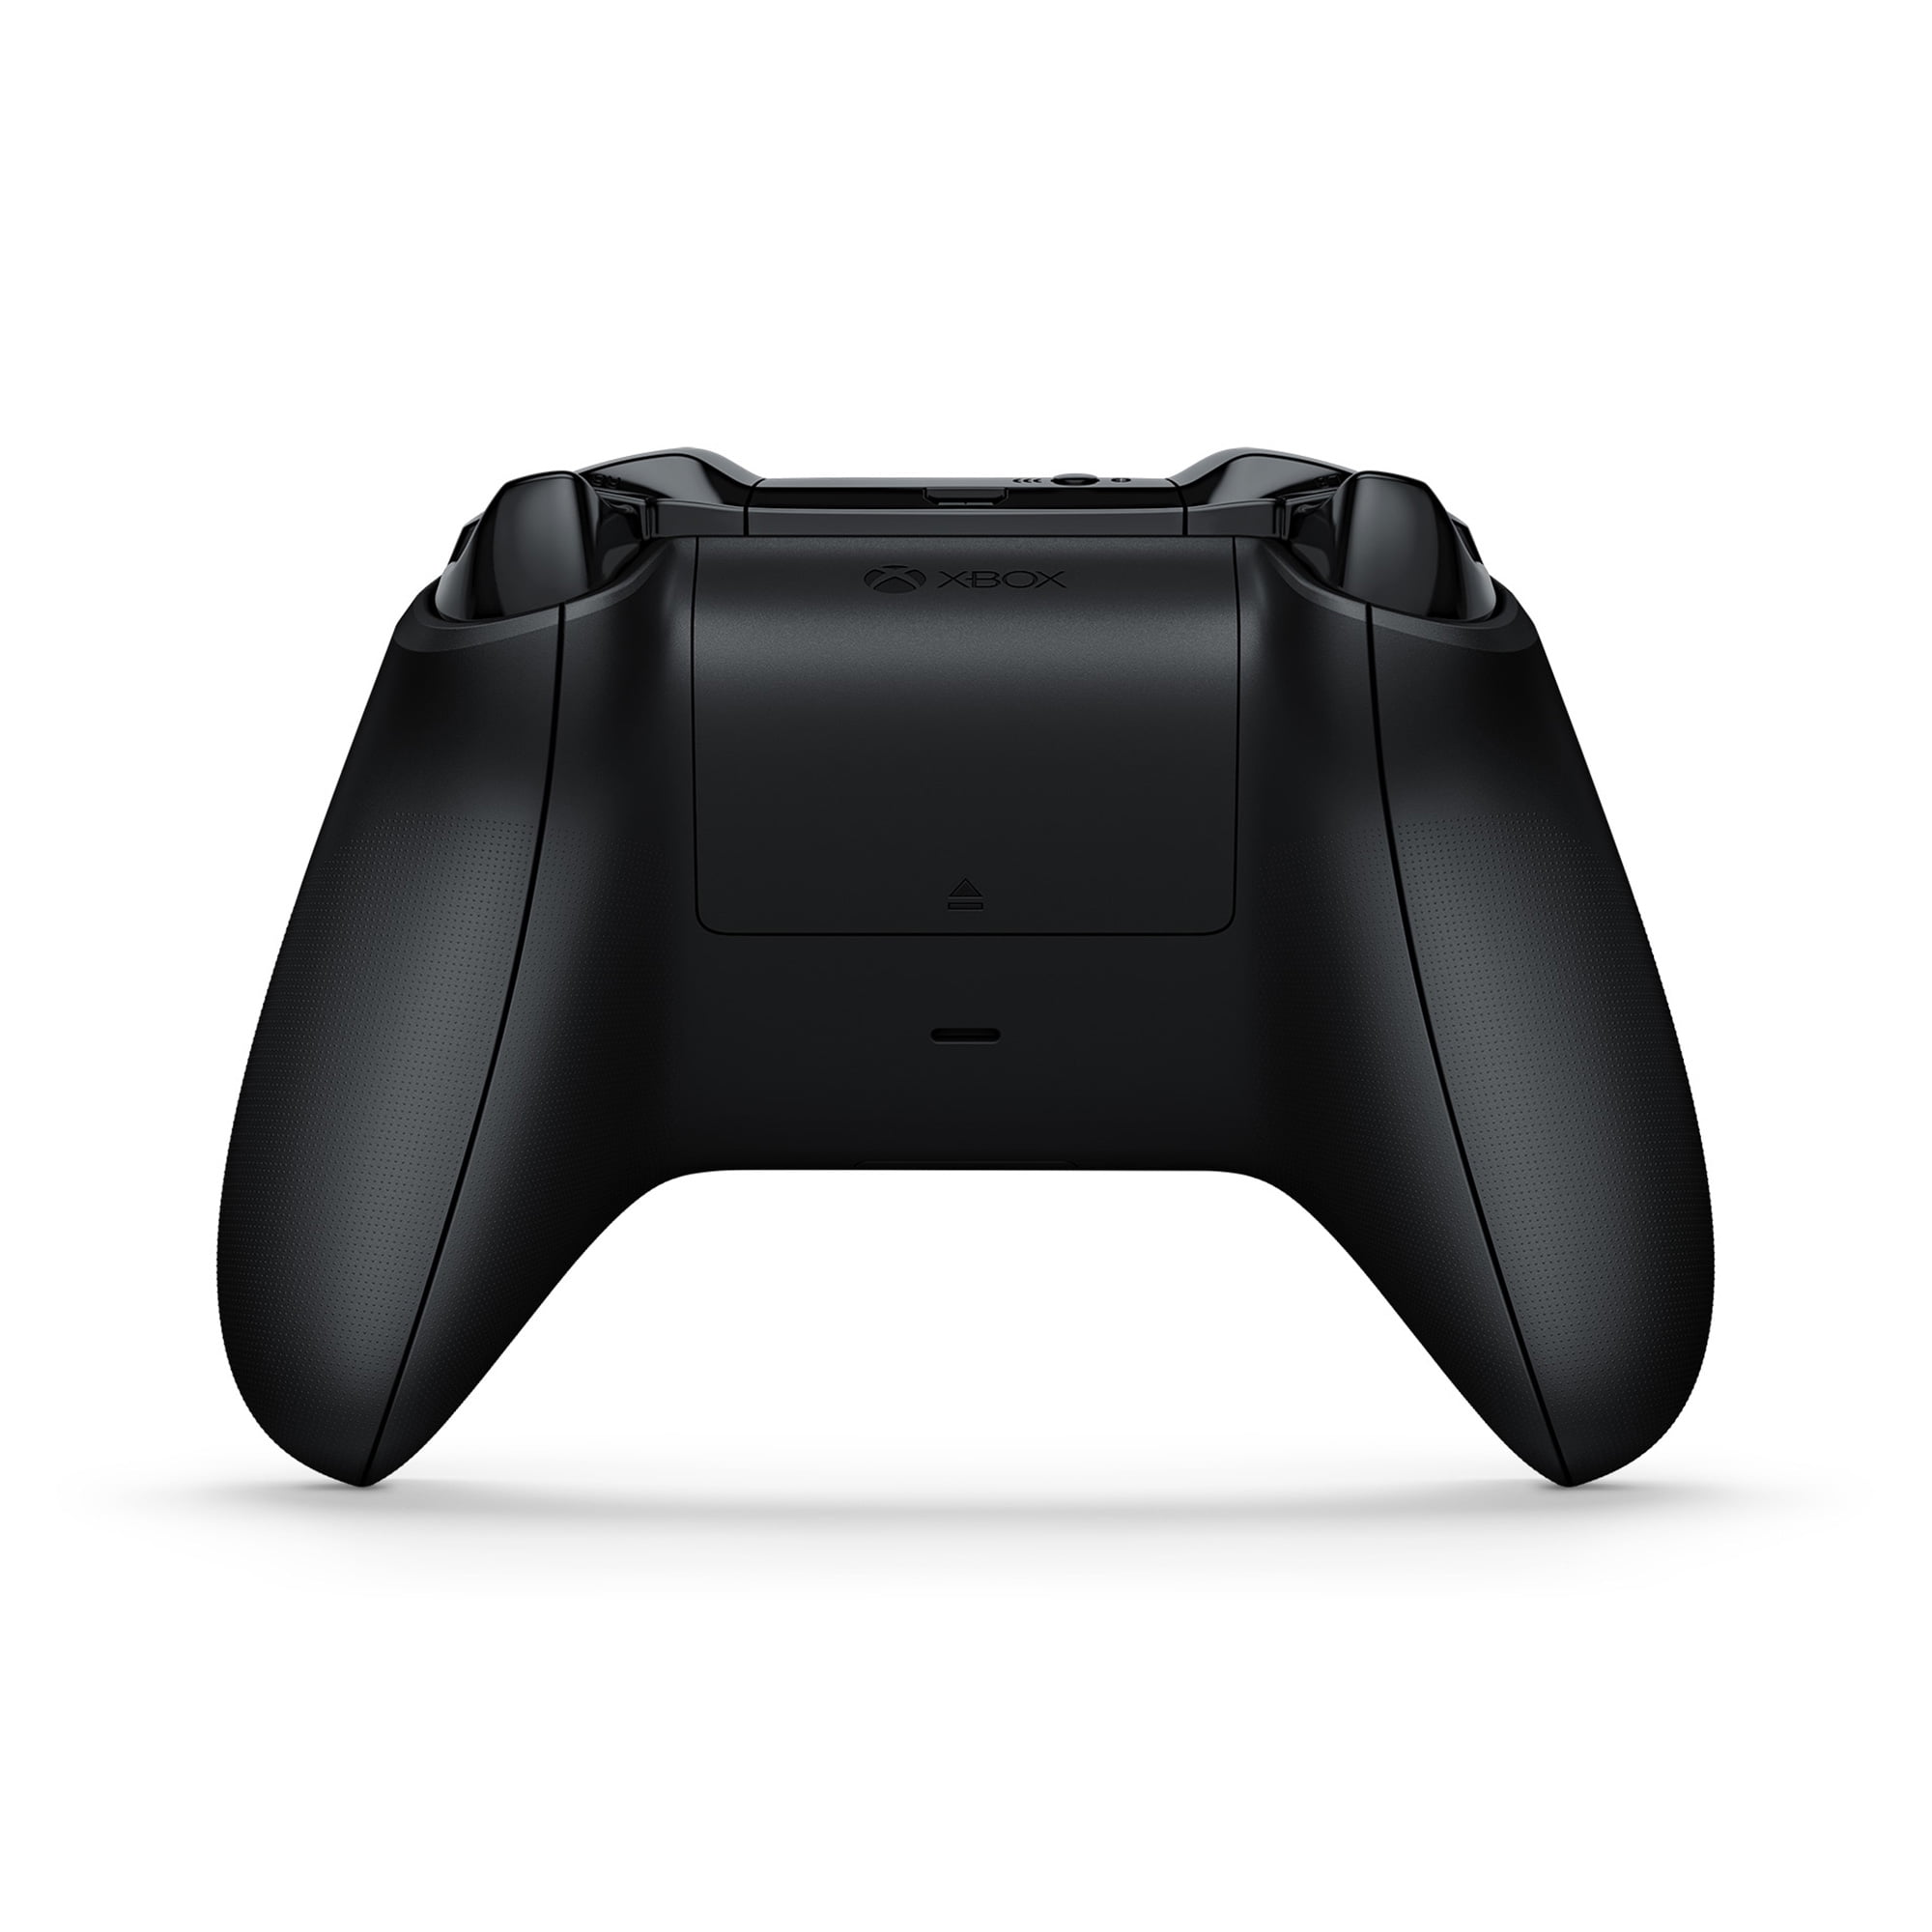 Aggressiv brysomme Få kontrol Microsoft Xbox One X 1TB Fallout 76 Bundle, Black, CYV-00146 - Walmart.com